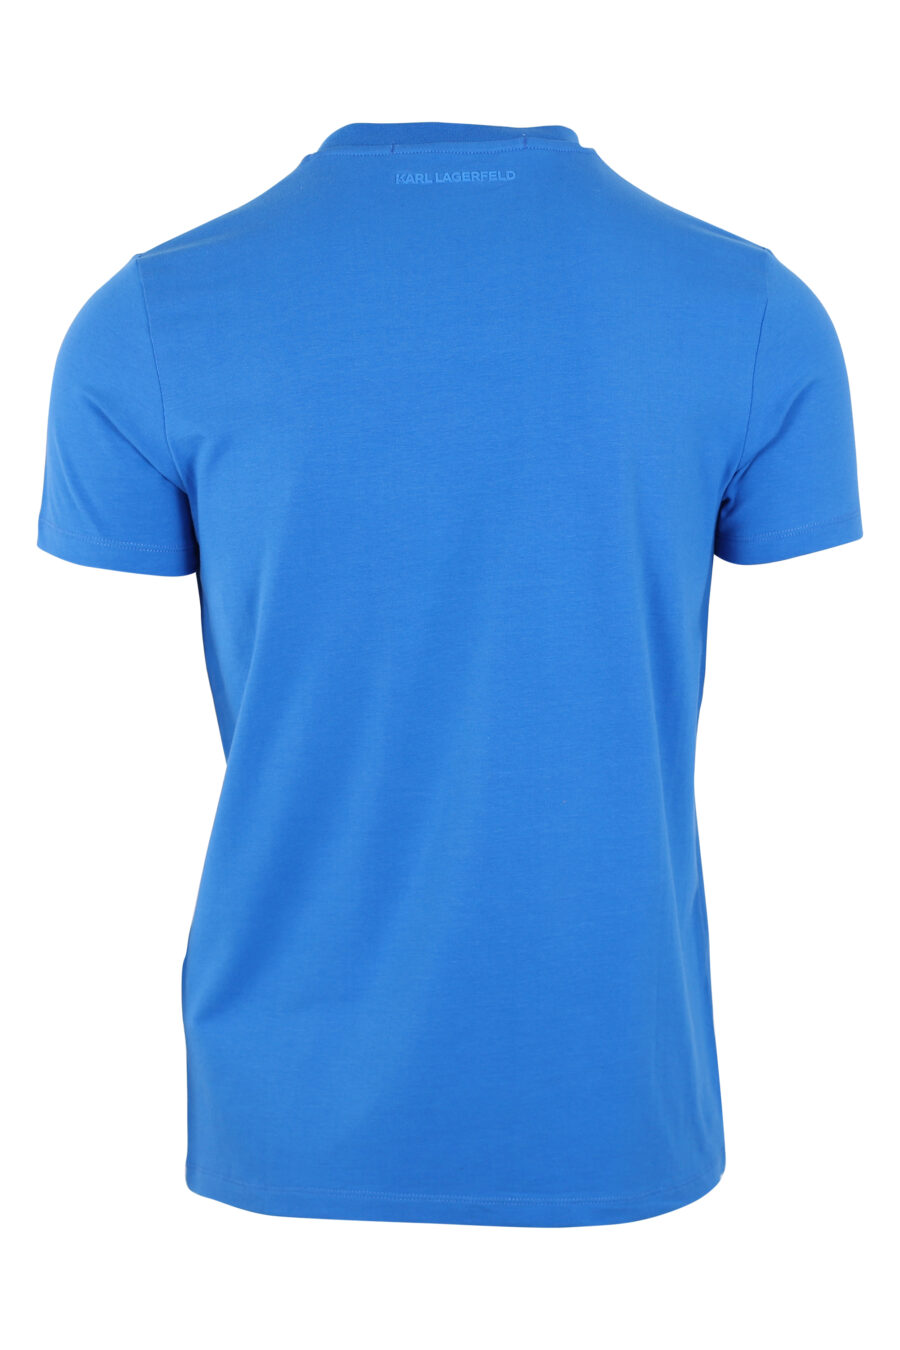 Blaues T-Shirt mit kontrastierendem schwarzem "karl"-Maxilogo - IMG 9448